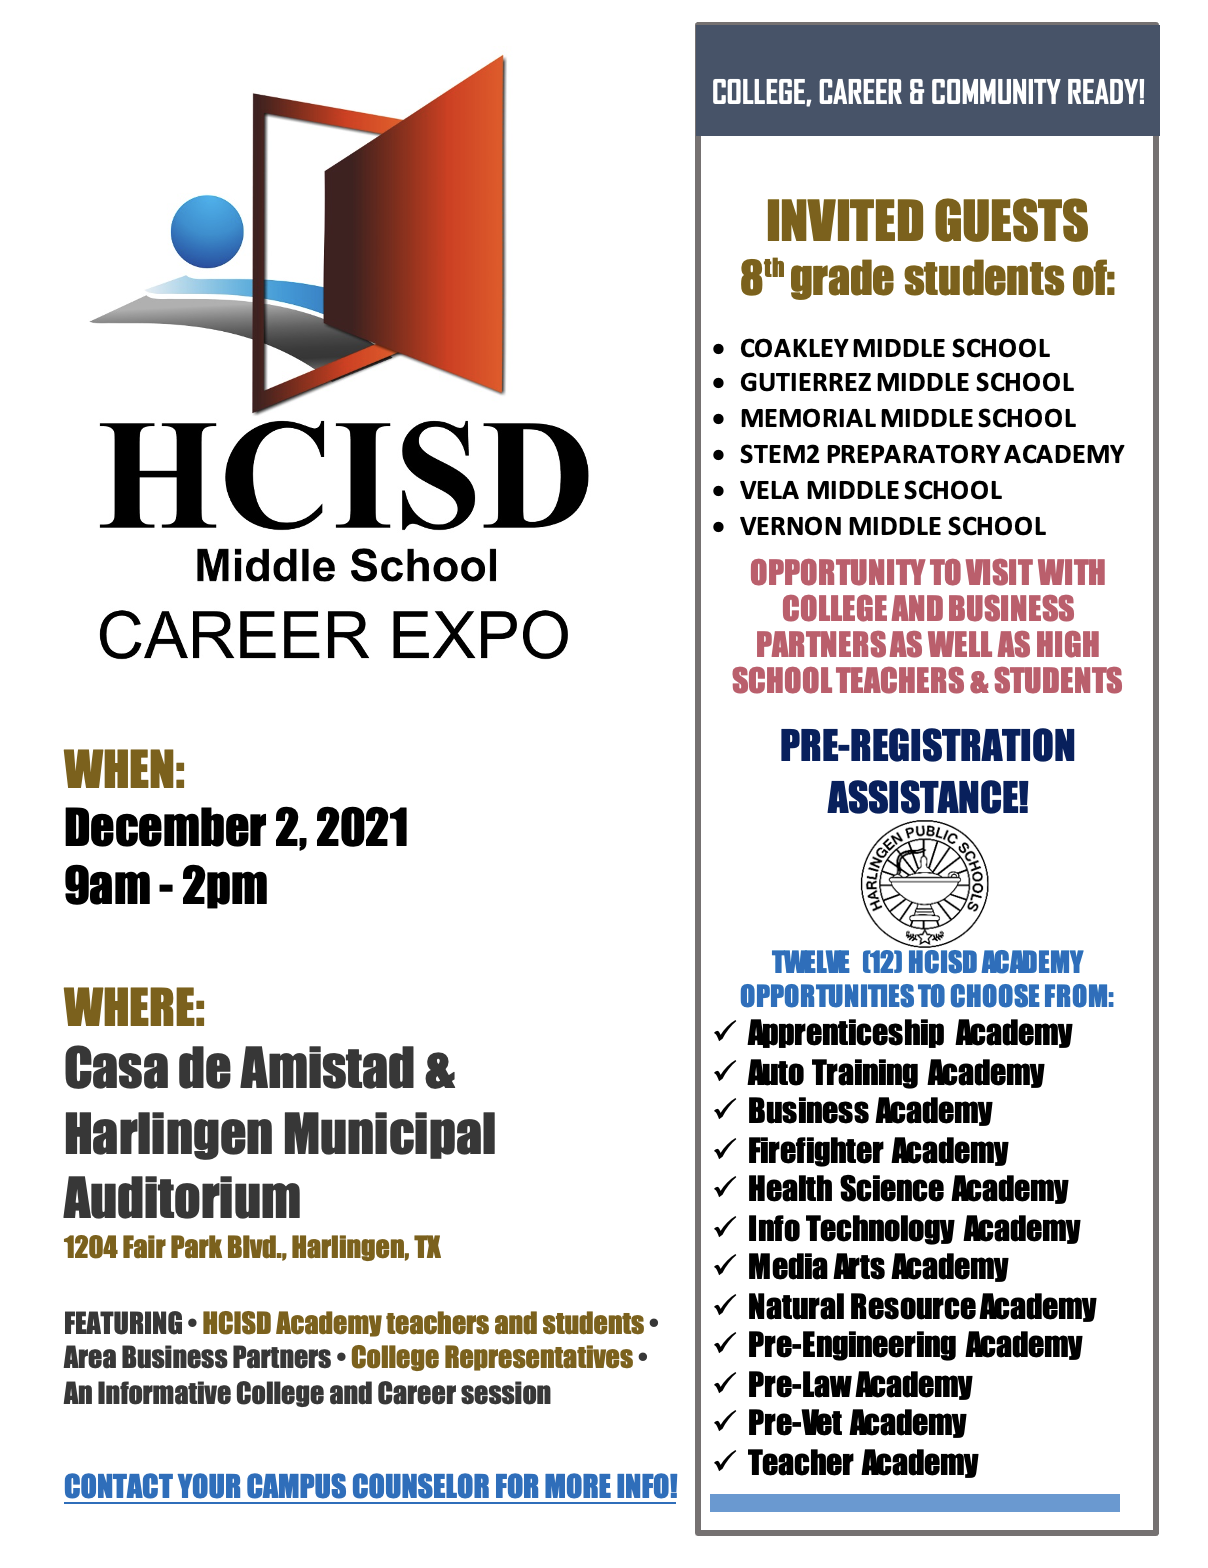 HCISD hosts Middle School Career Expo